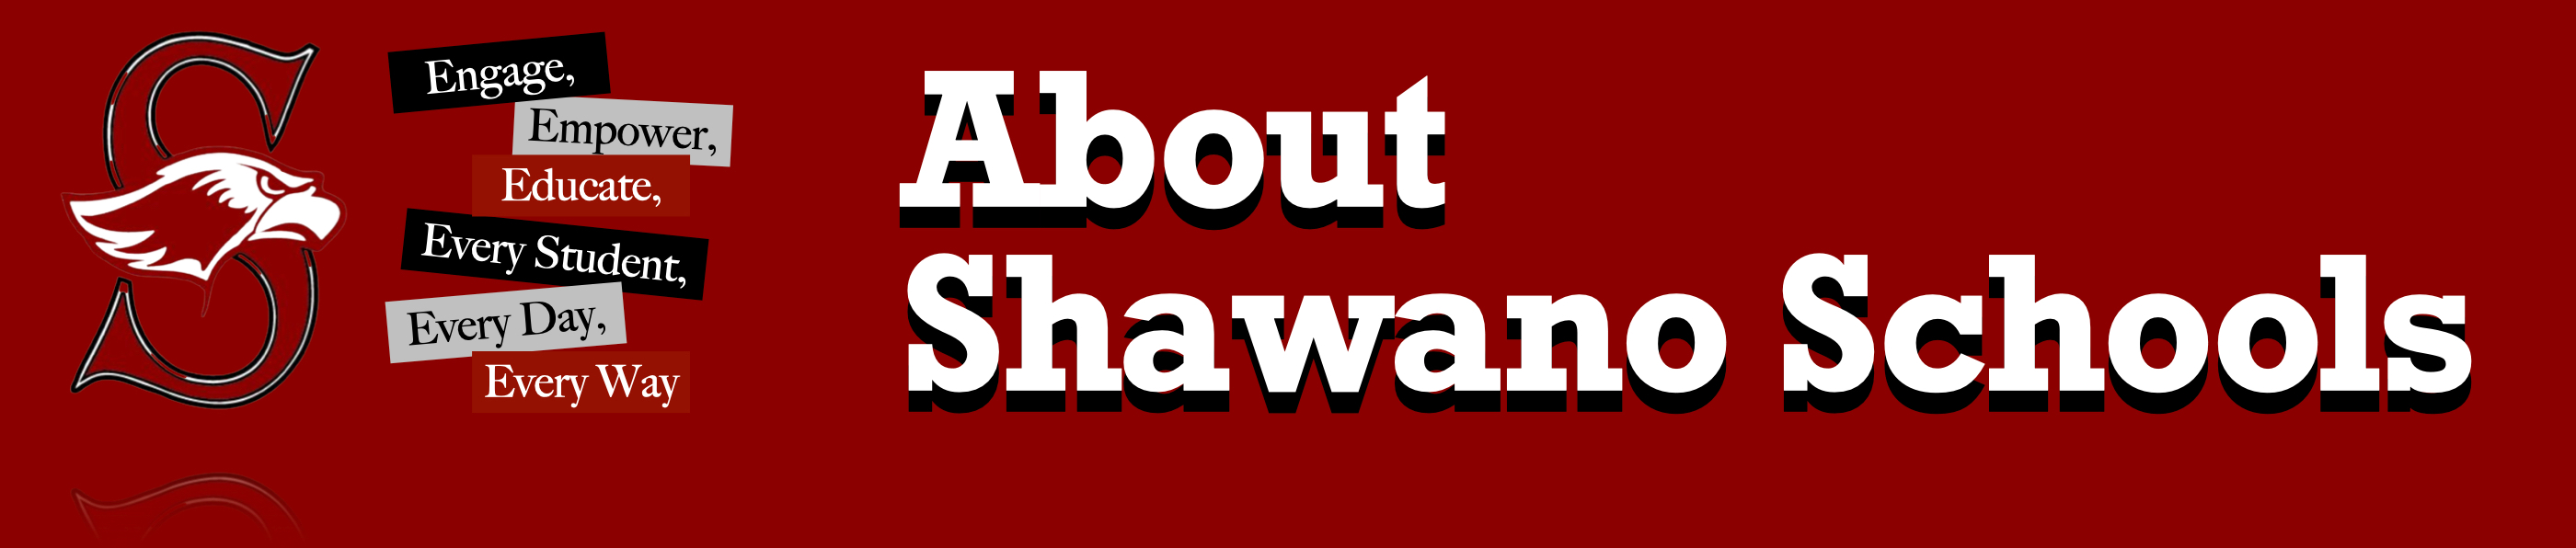 About Shawano Schools